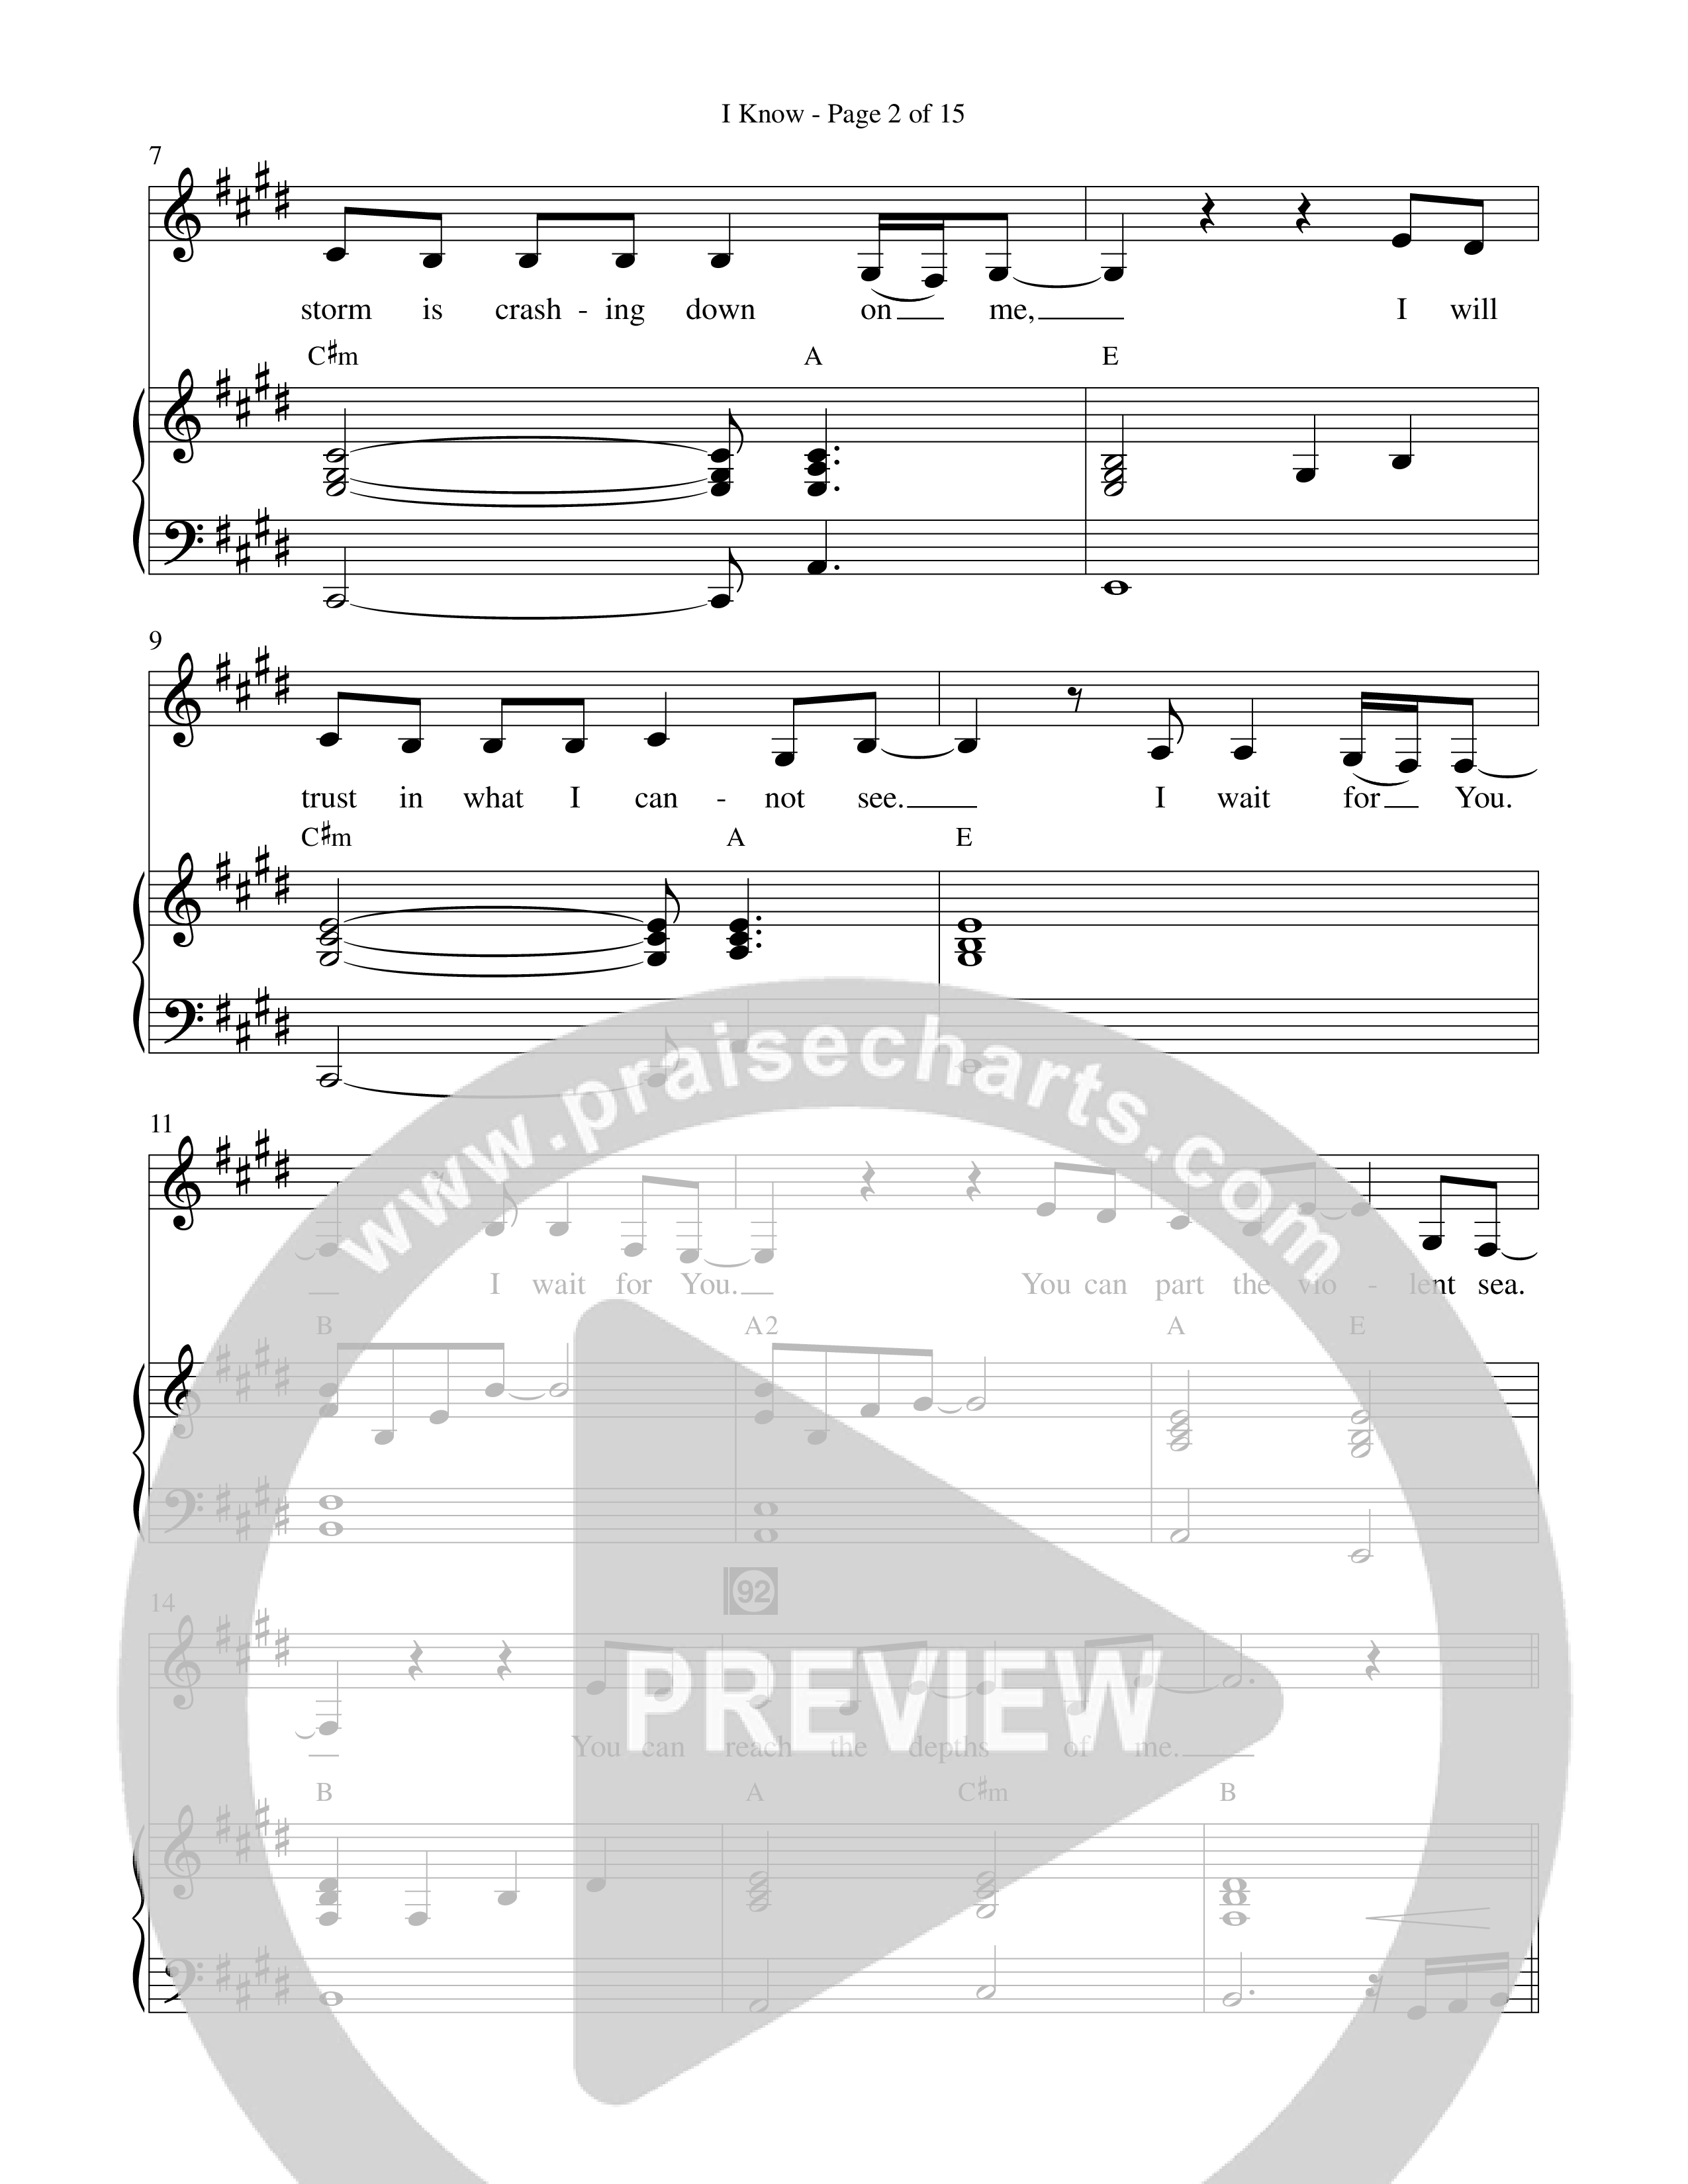 I Know (Choral Anthem SATB) Choral Vocal Parts (Prestonwood Worship / Prestonwood Choir / Arr. Jonathan Walker)